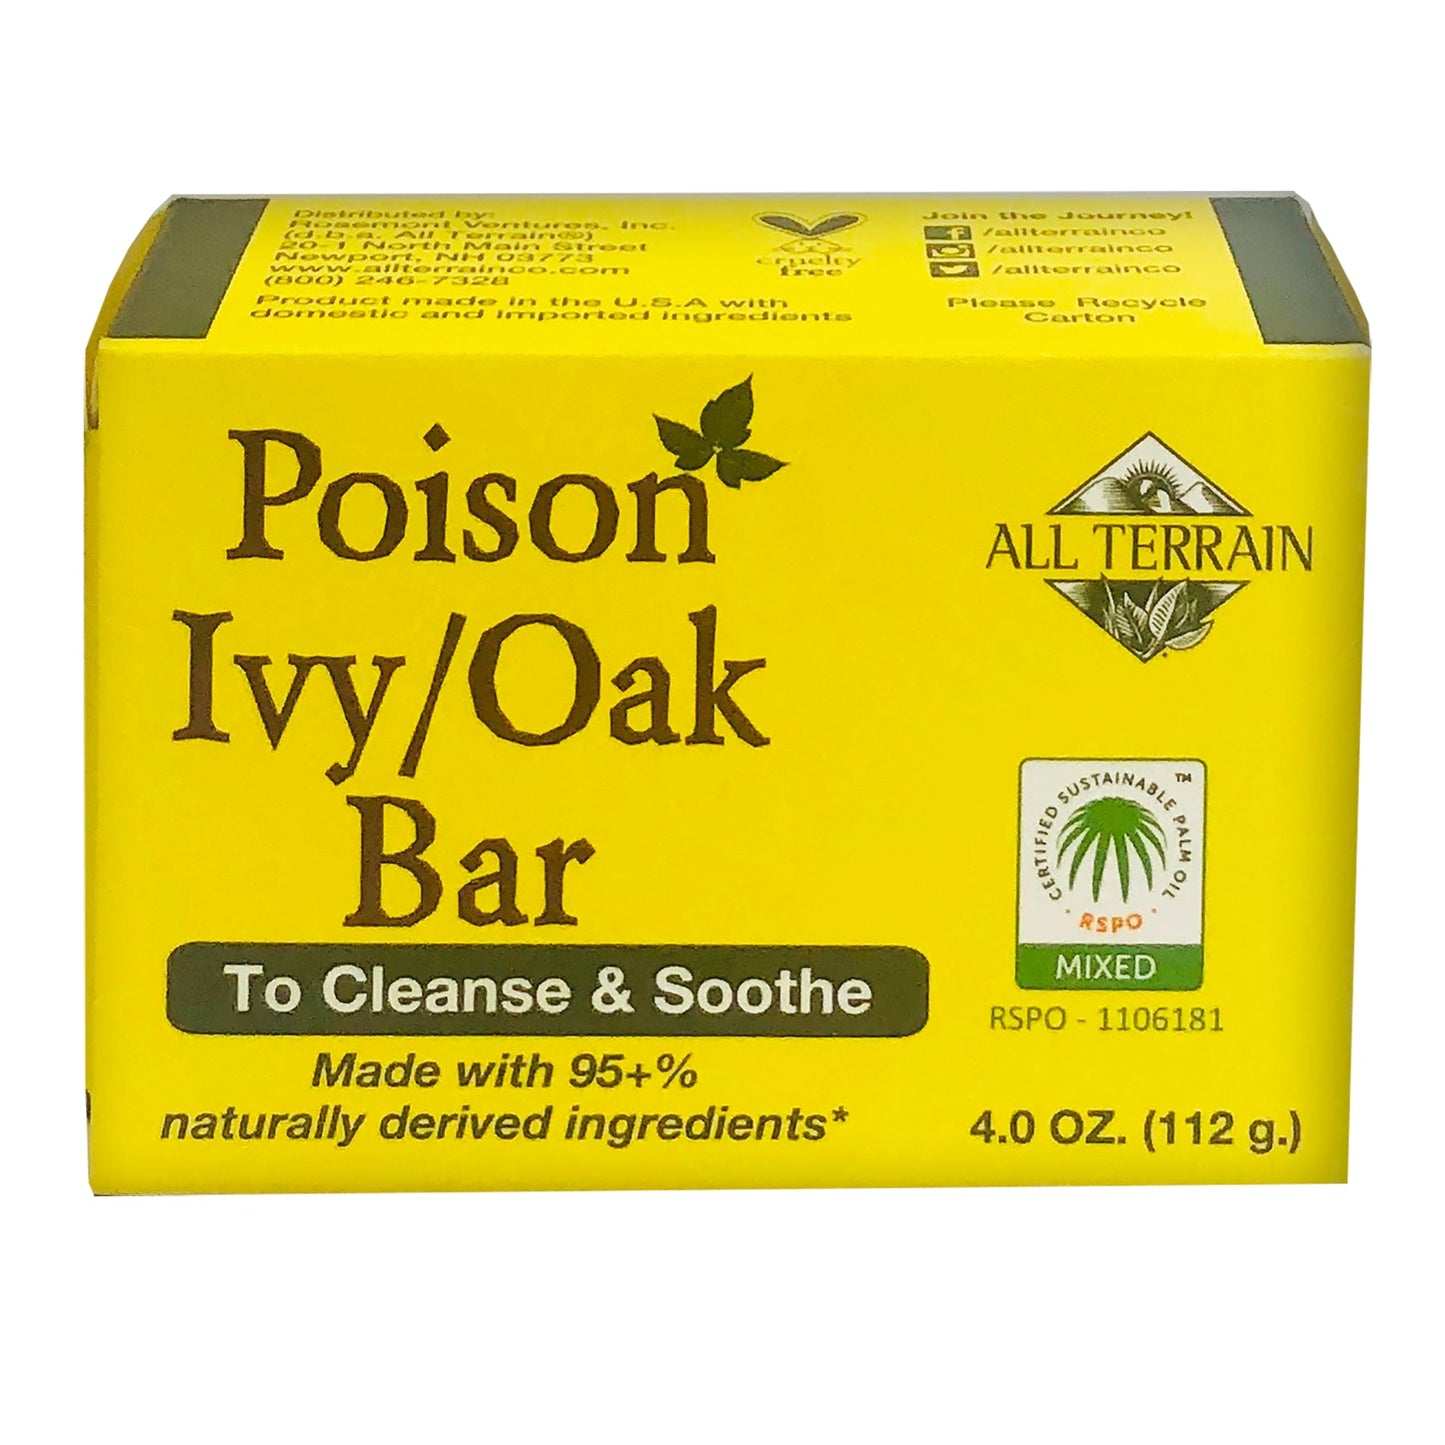 Poison Ivy/Oak Bar